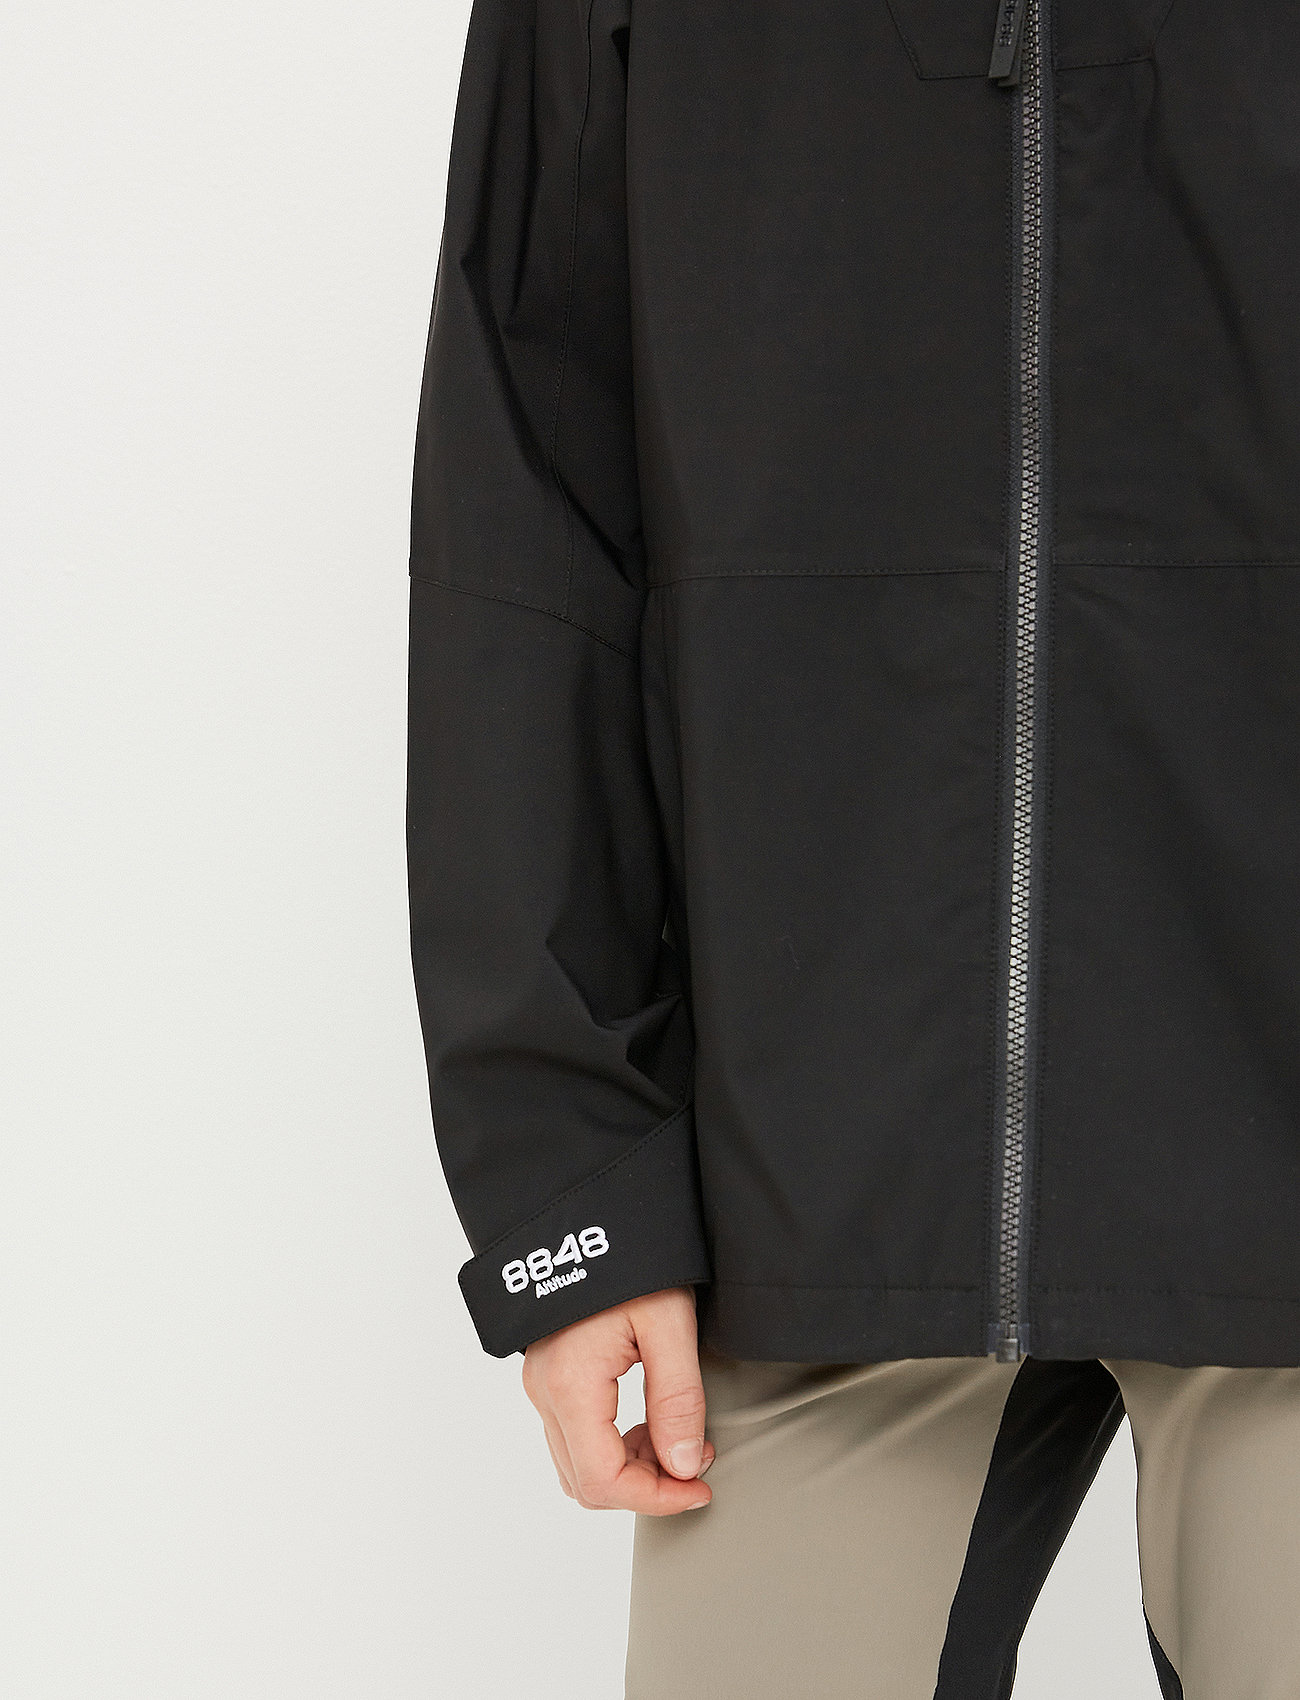 8848 Altitude Skur Jacket (Black), (59.47 €) | Large selection of outlet-styles | Booztlet.com